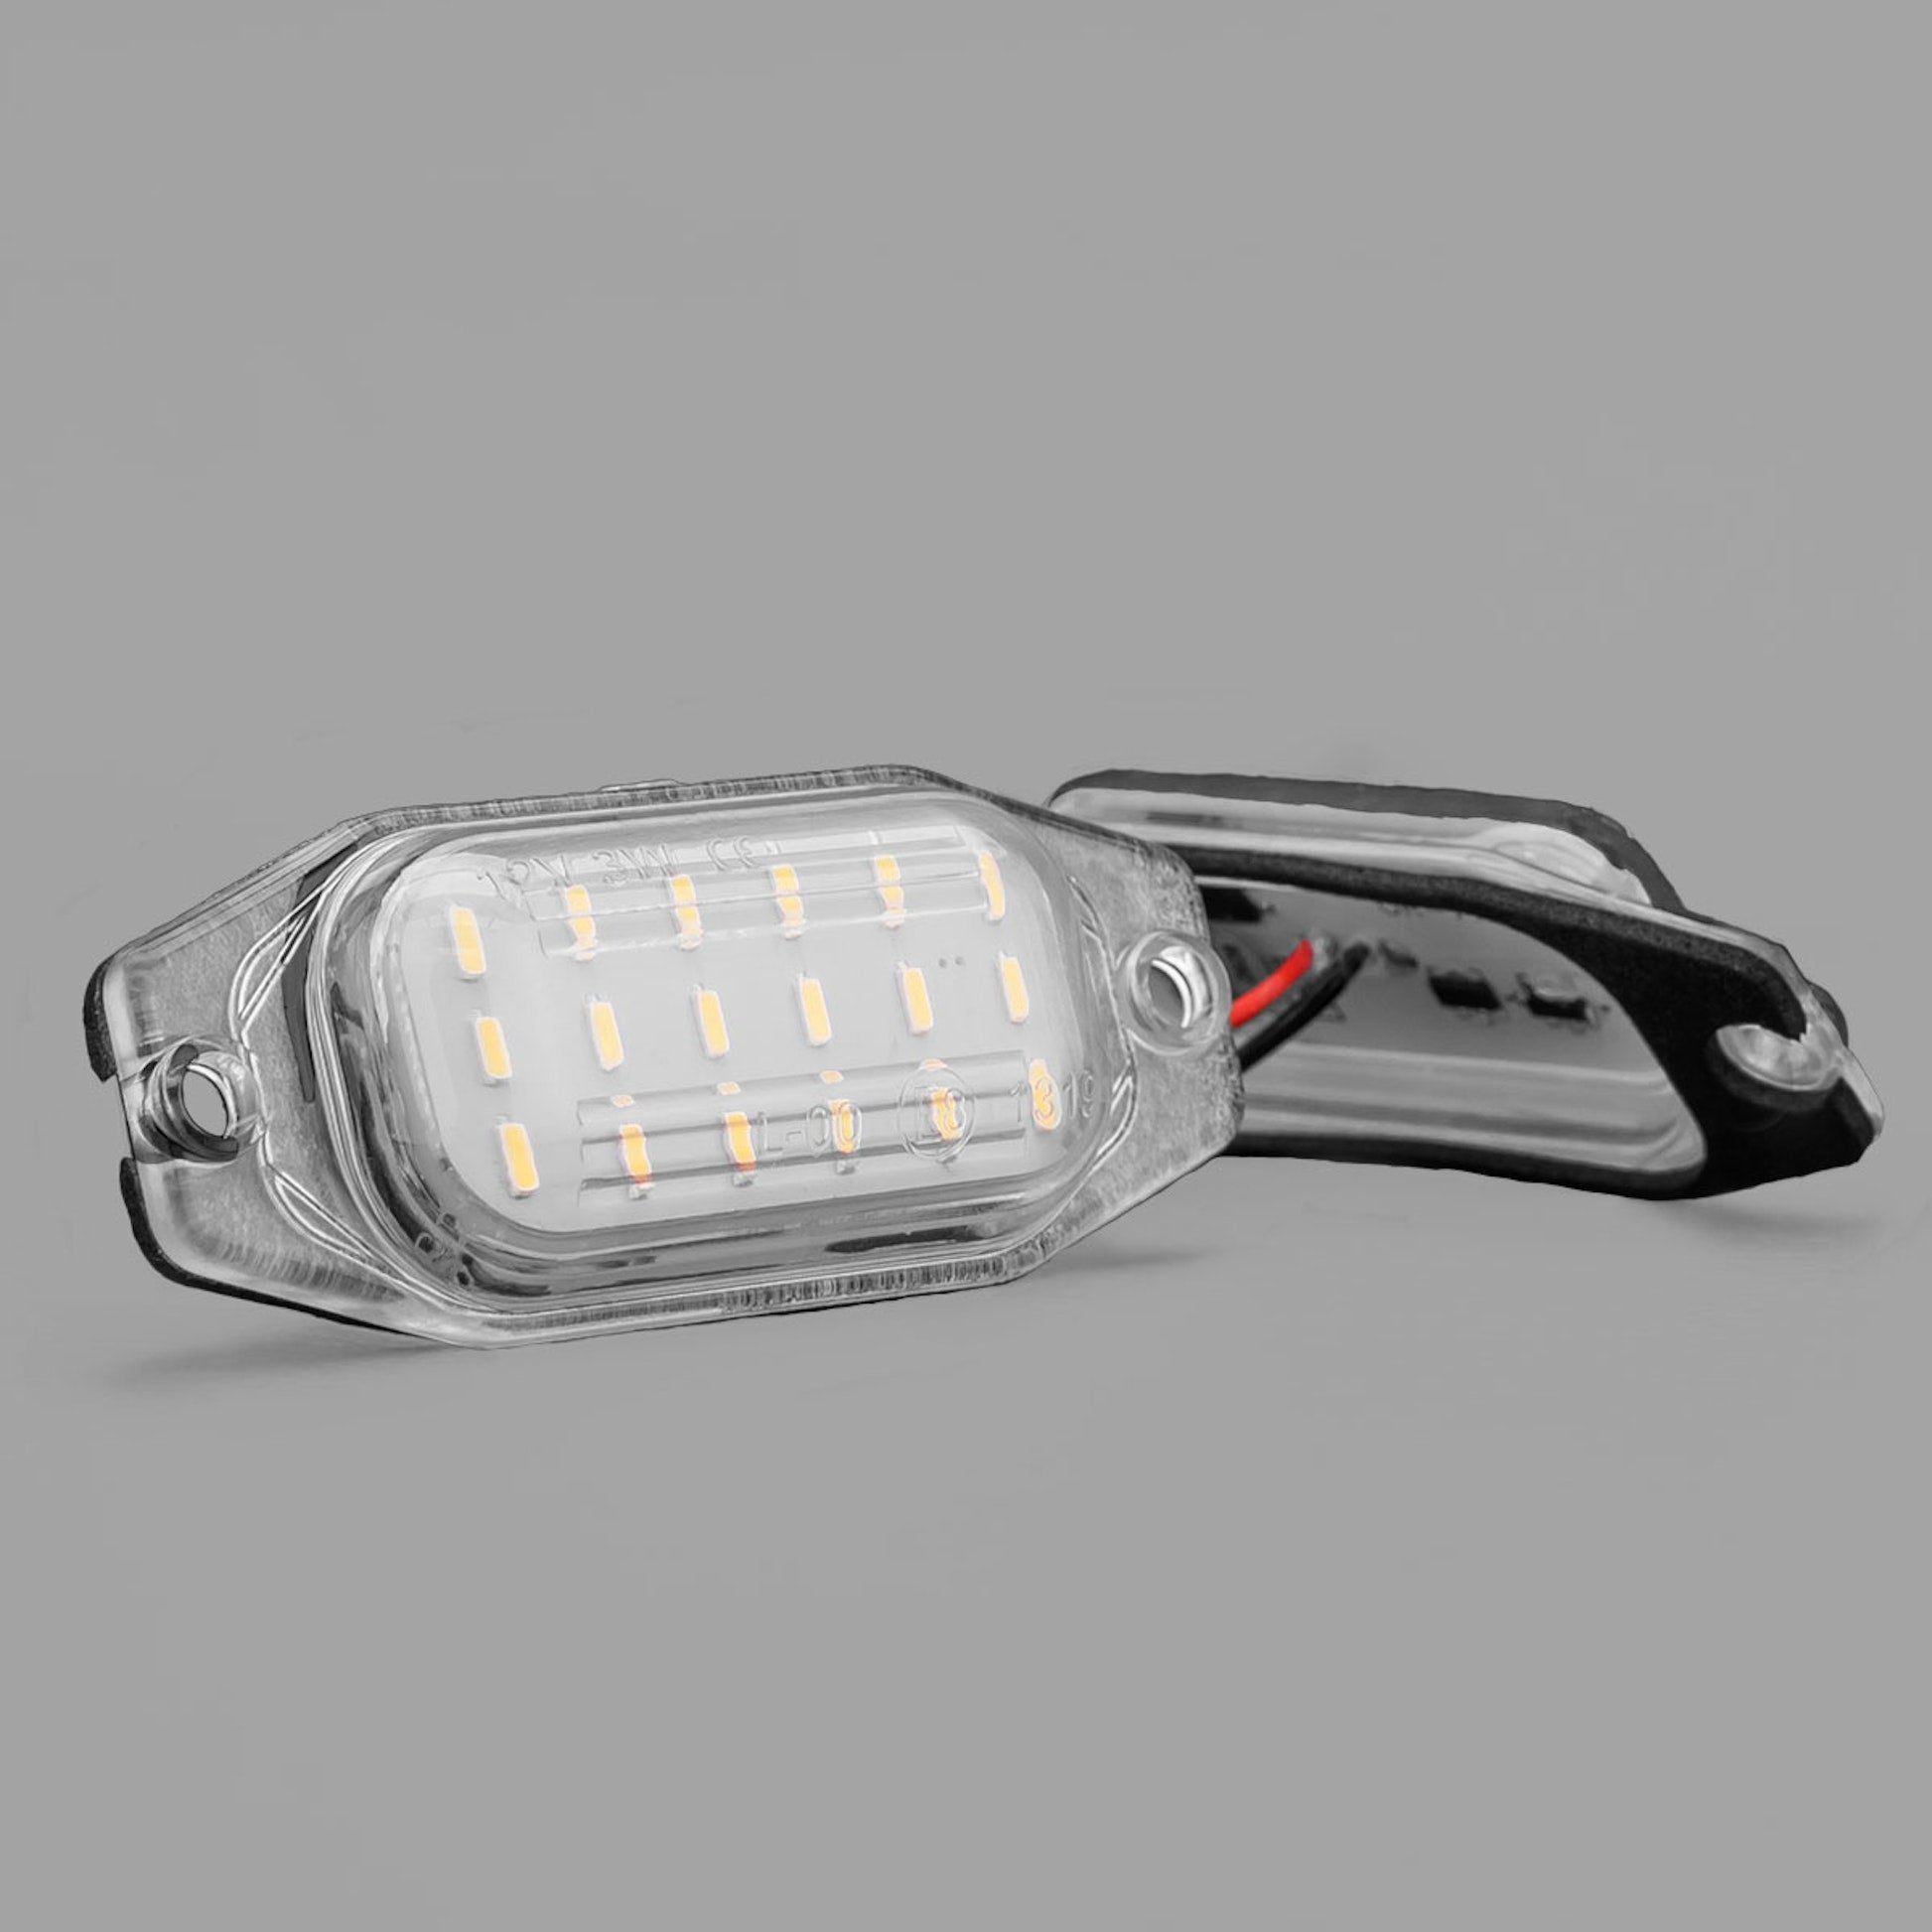 STEDI LED License Plate Light To Suit Toyota Landcruiser Models (A)